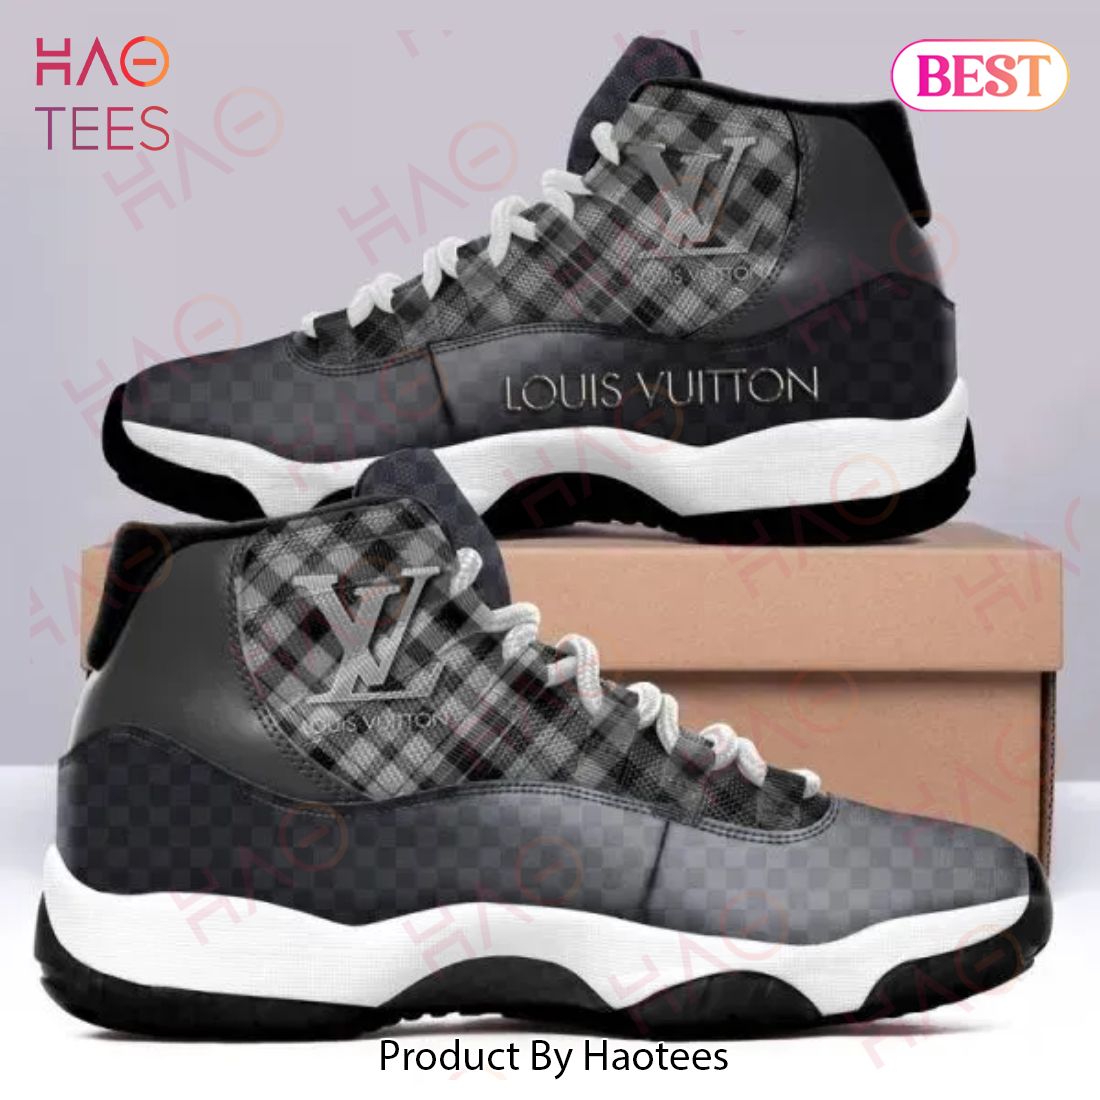 Louis Vuitton LV Air Jordan 11 Sneakers Shoes Black Hot 2022 Gifts Unisex